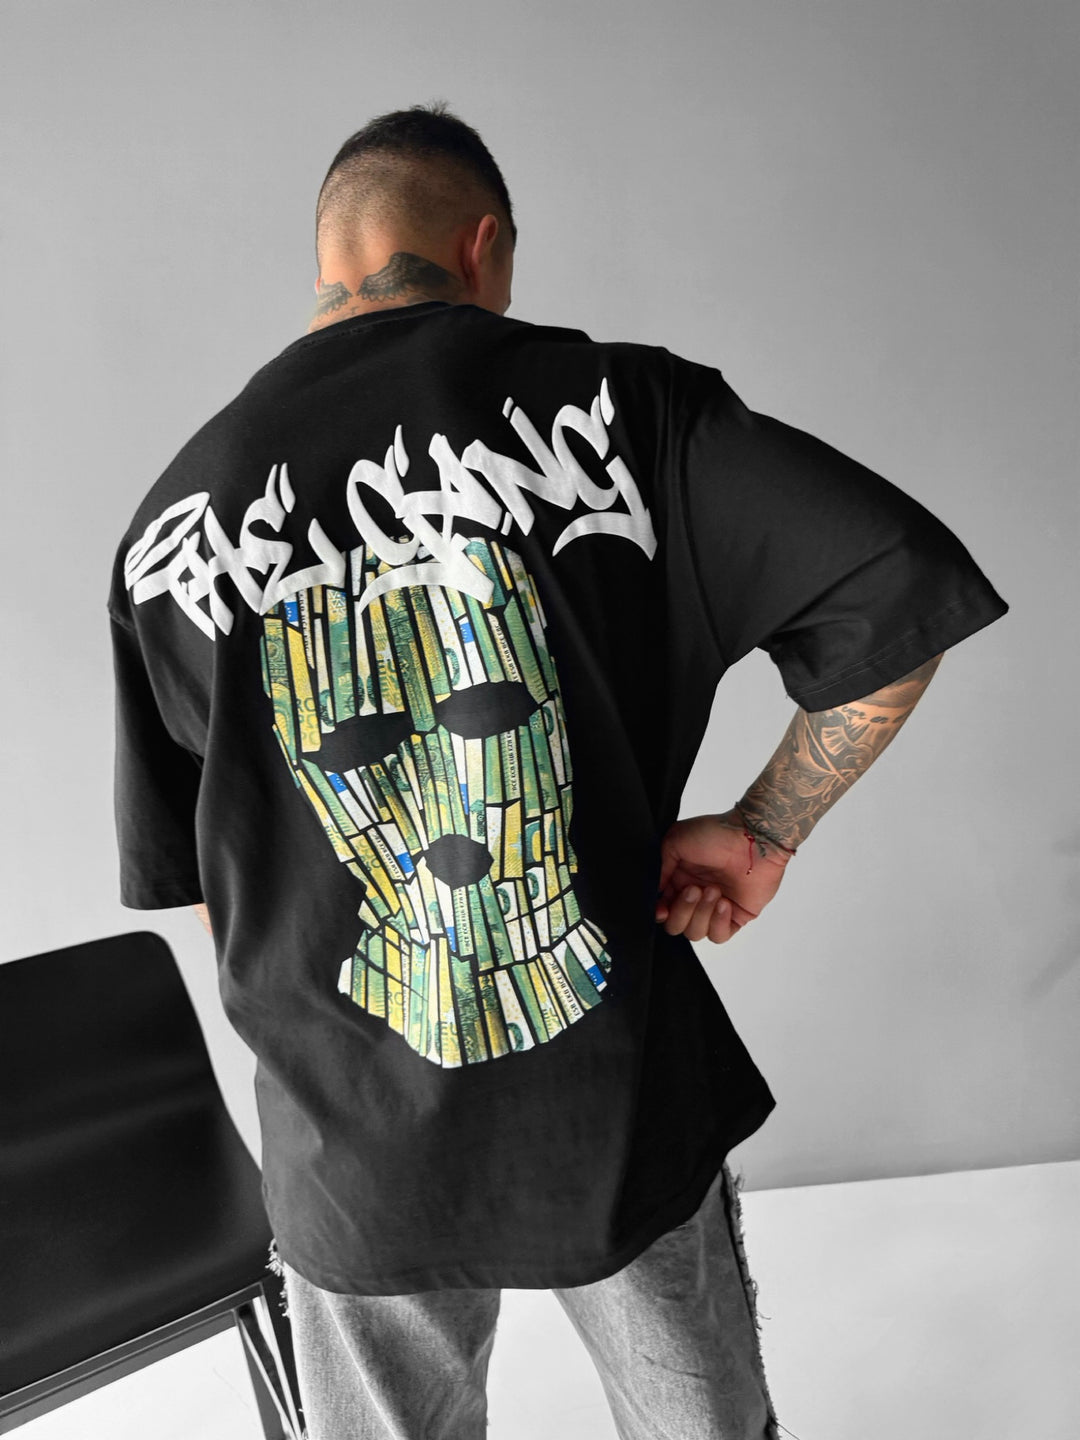 Oversize 'The Gang' T-shirt - Black